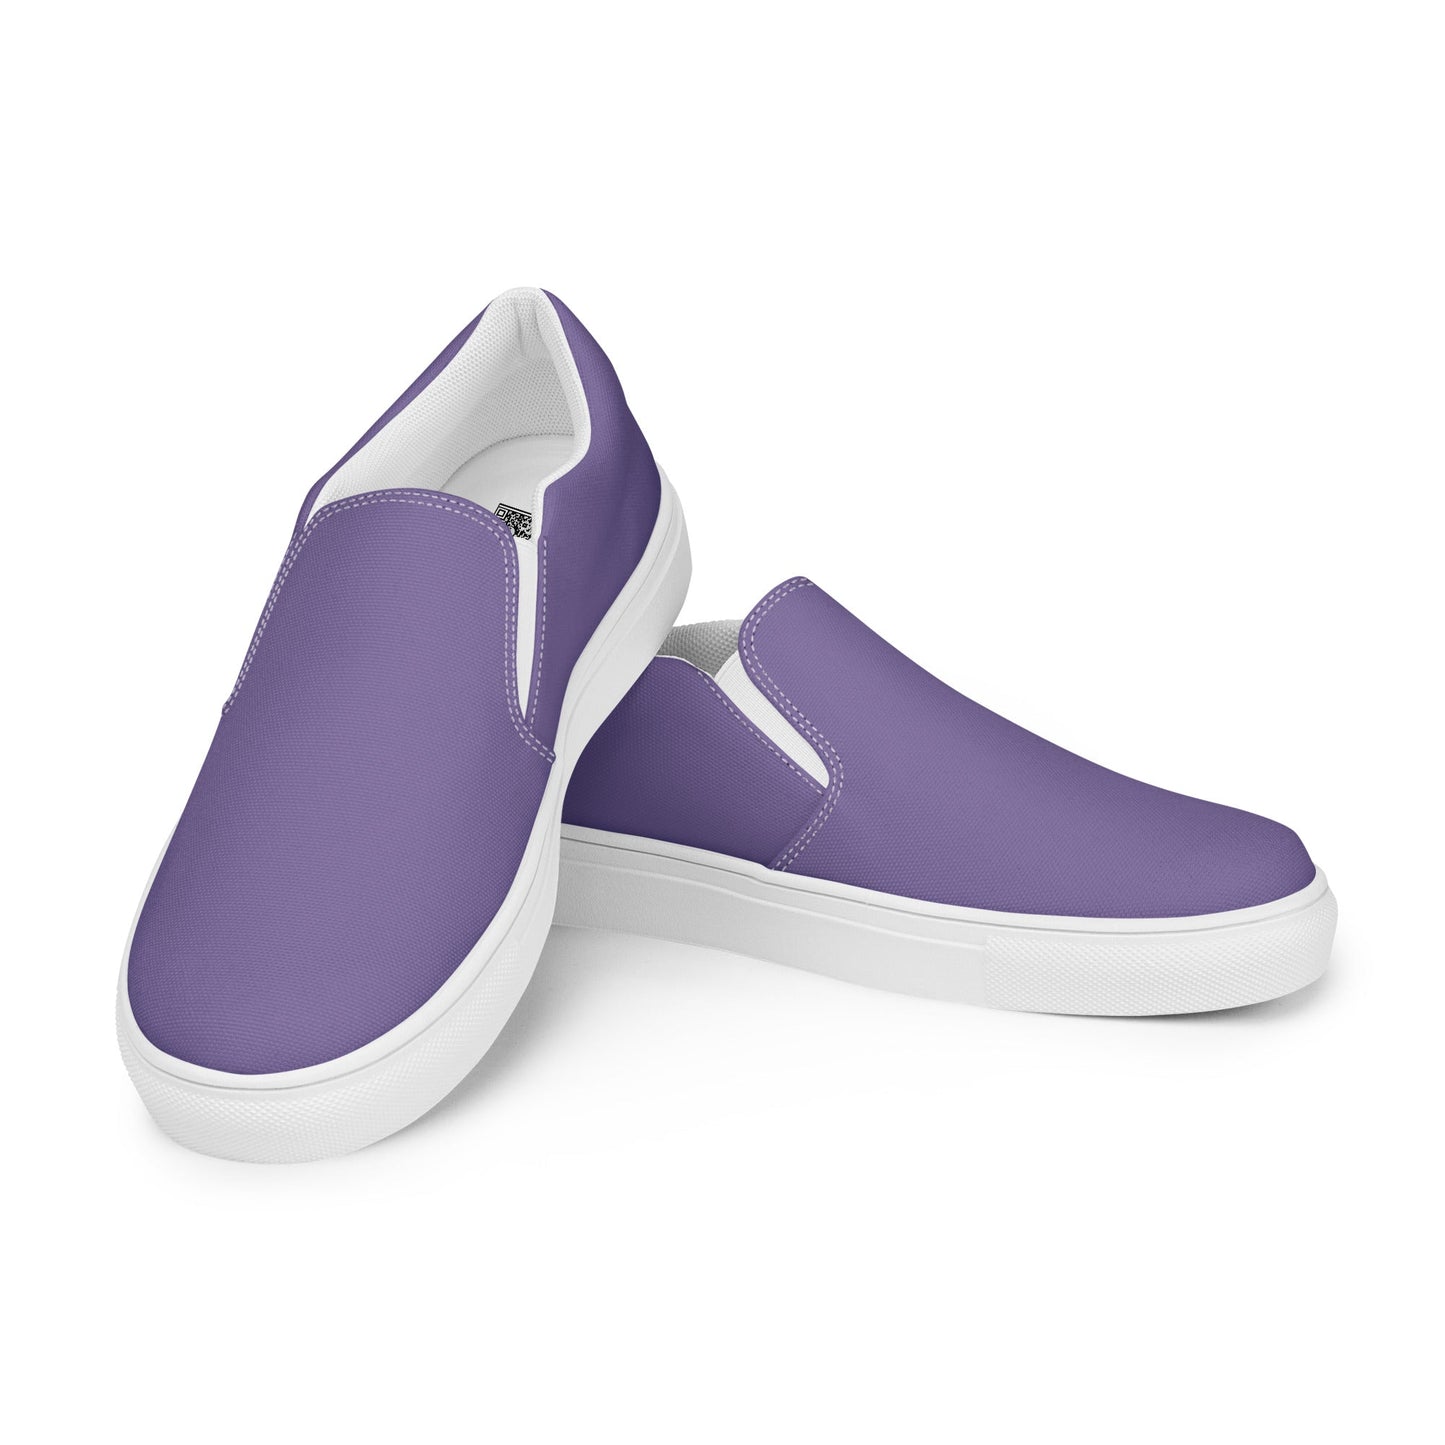 klasneakers Women’s slip-on canvas shoes - Purple